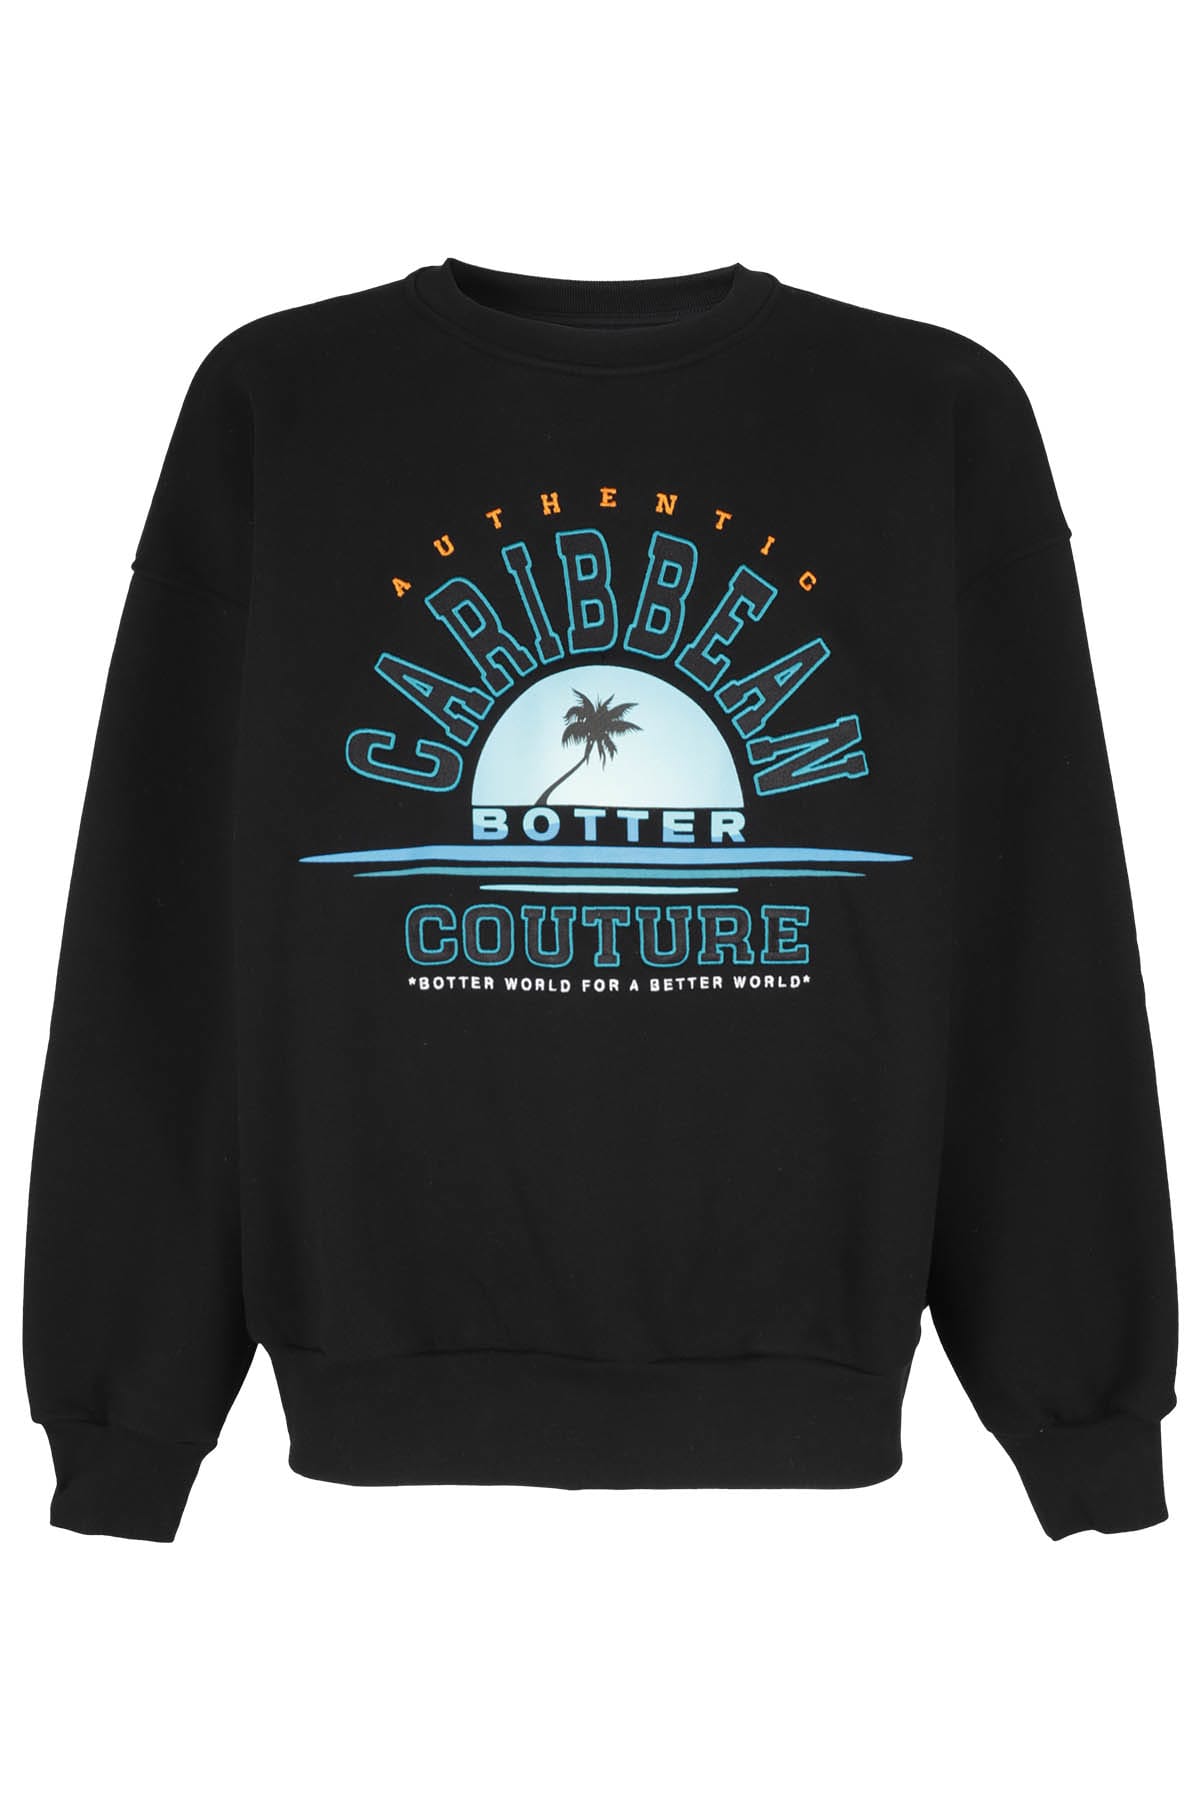 Shop Botter Crewneck Sweater Caribbean In Black College